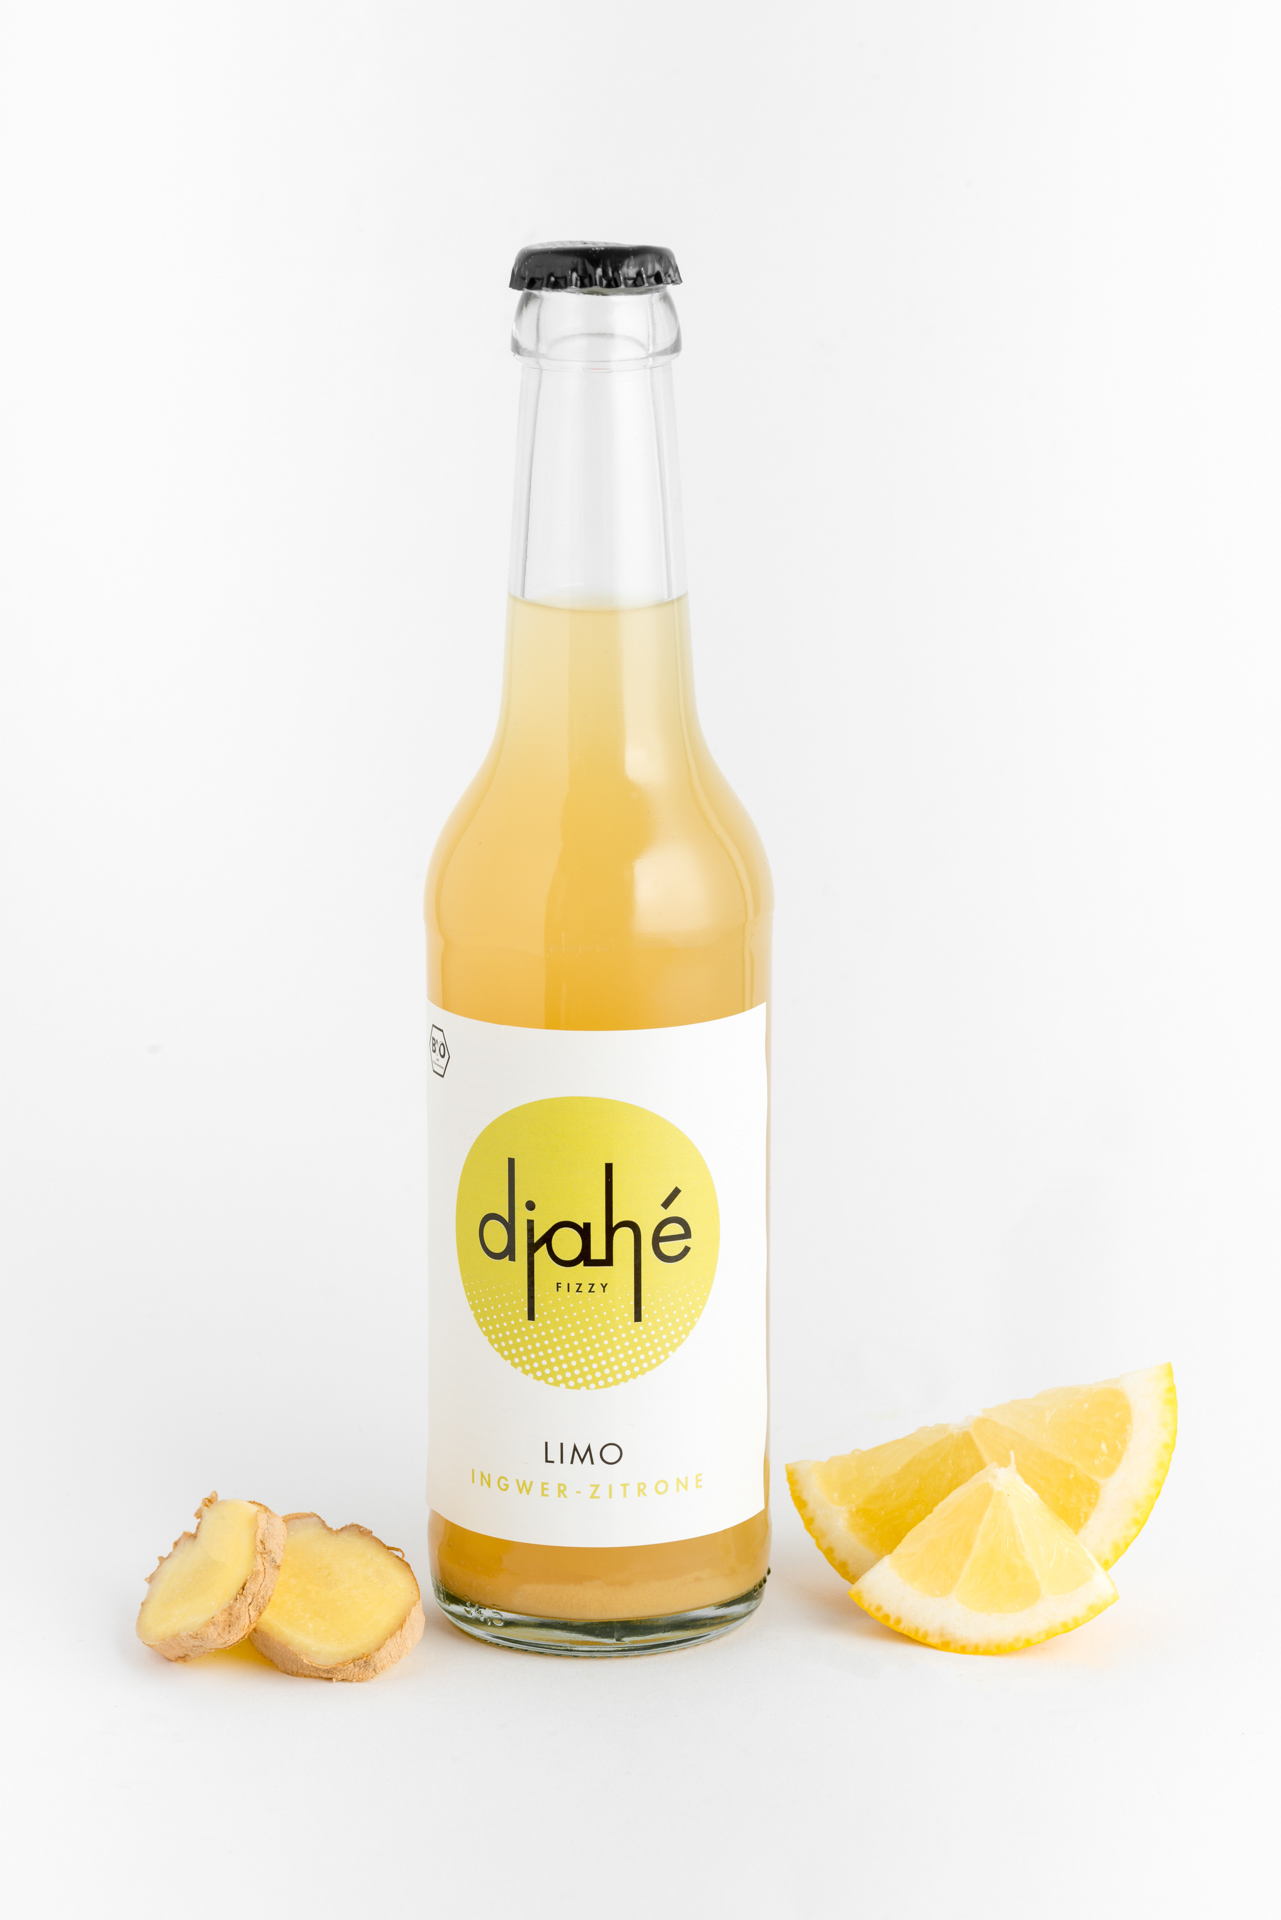 Ingwer Zitrone Limonade Djahé 1_LB_9599